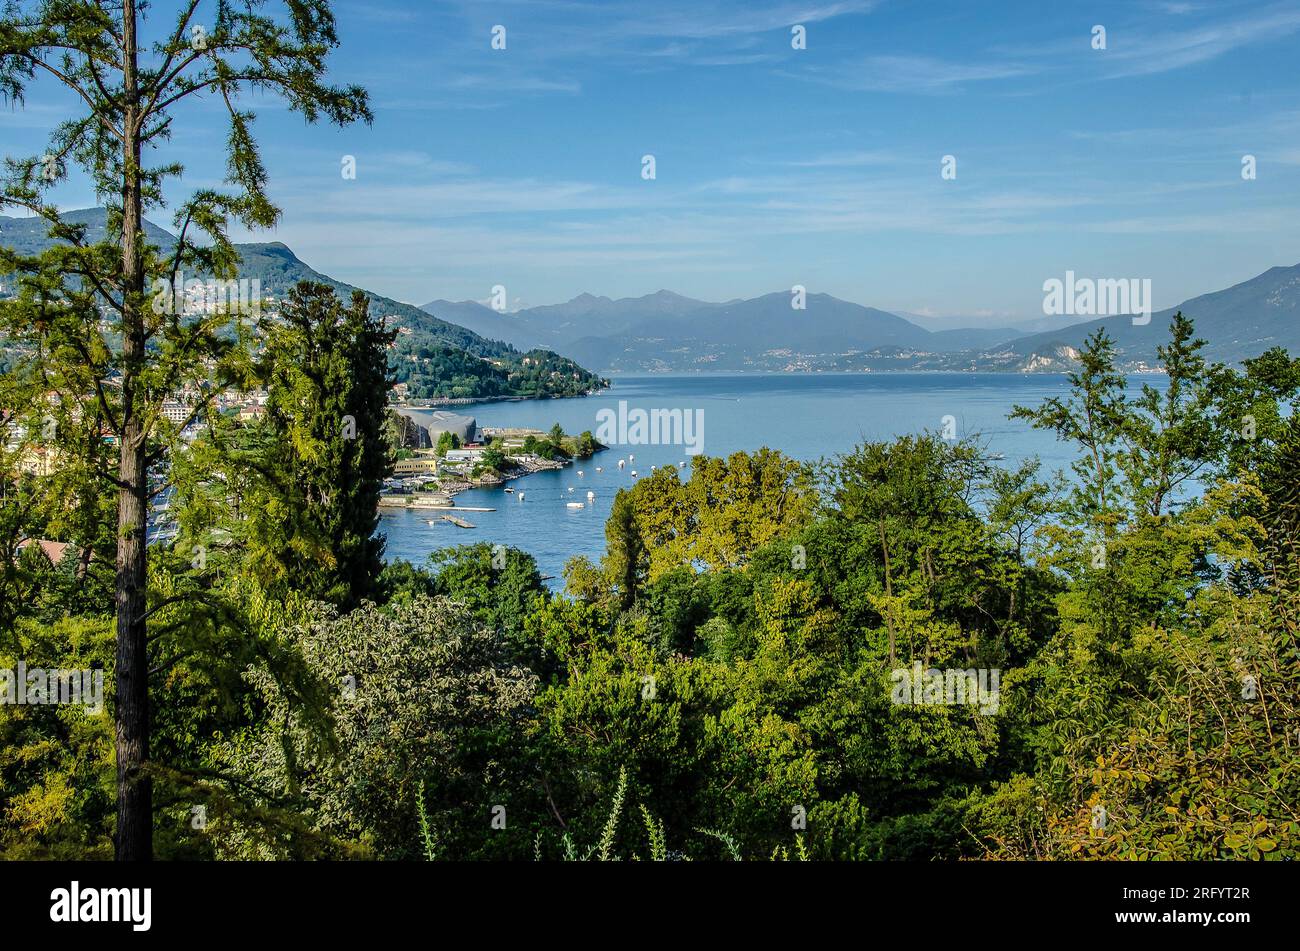 In Verbania on Lake Maggiore, the gardens of Villa Taranto area an oasis of beauty and a gardener's dream. Stock Photo